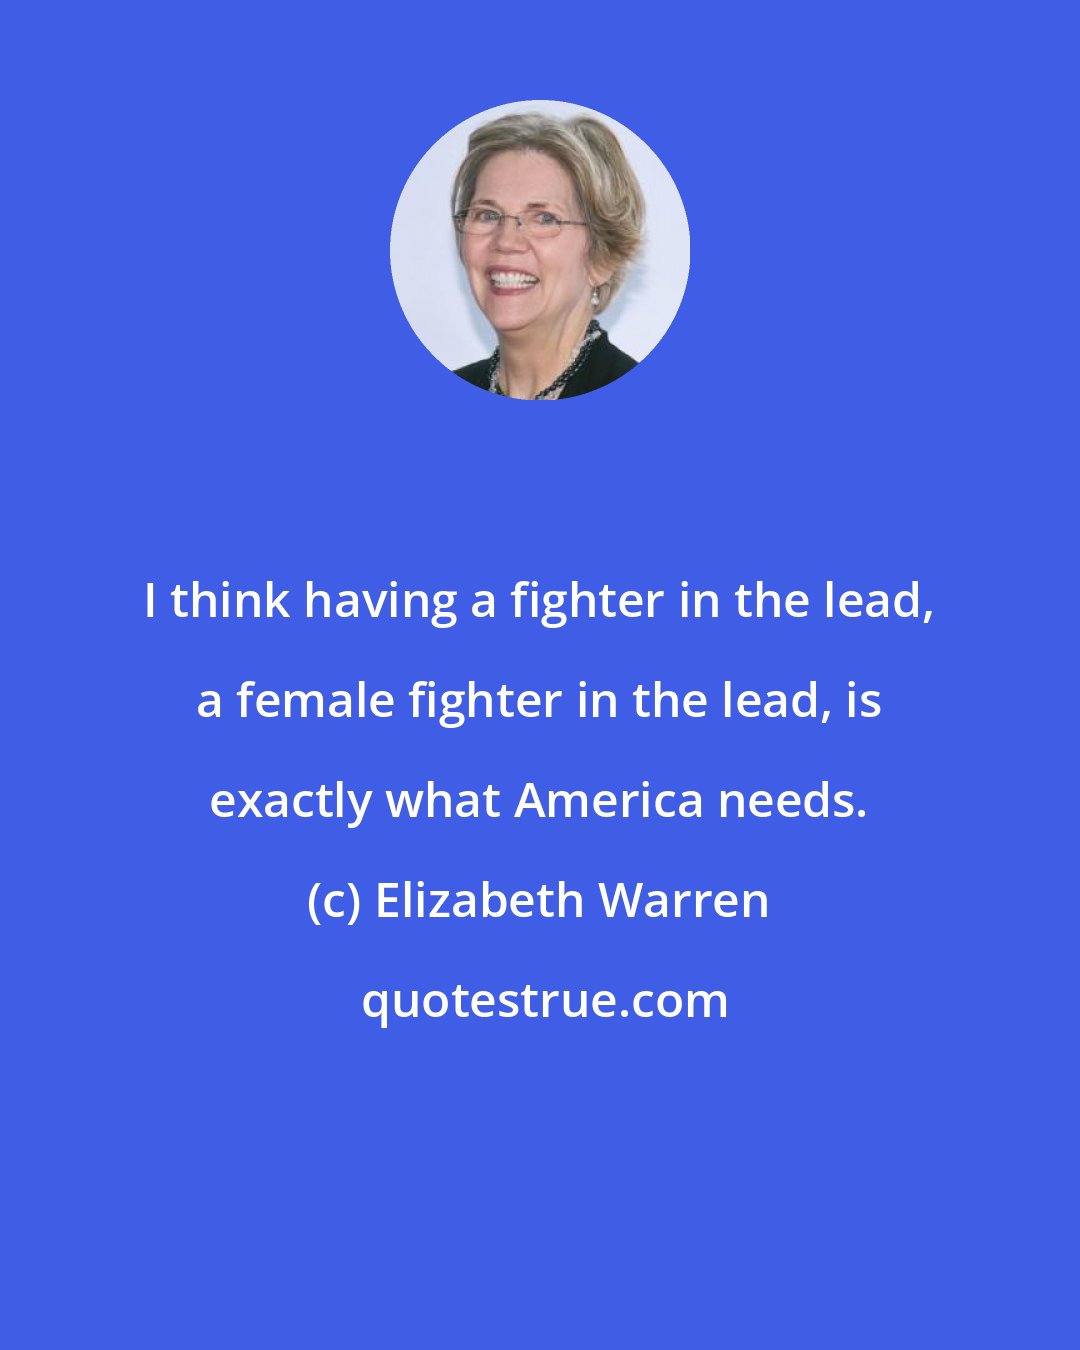 Elizabeth Warren: I think having a fighter in the lead, a female fighter in the lead, is exactly what America needs.